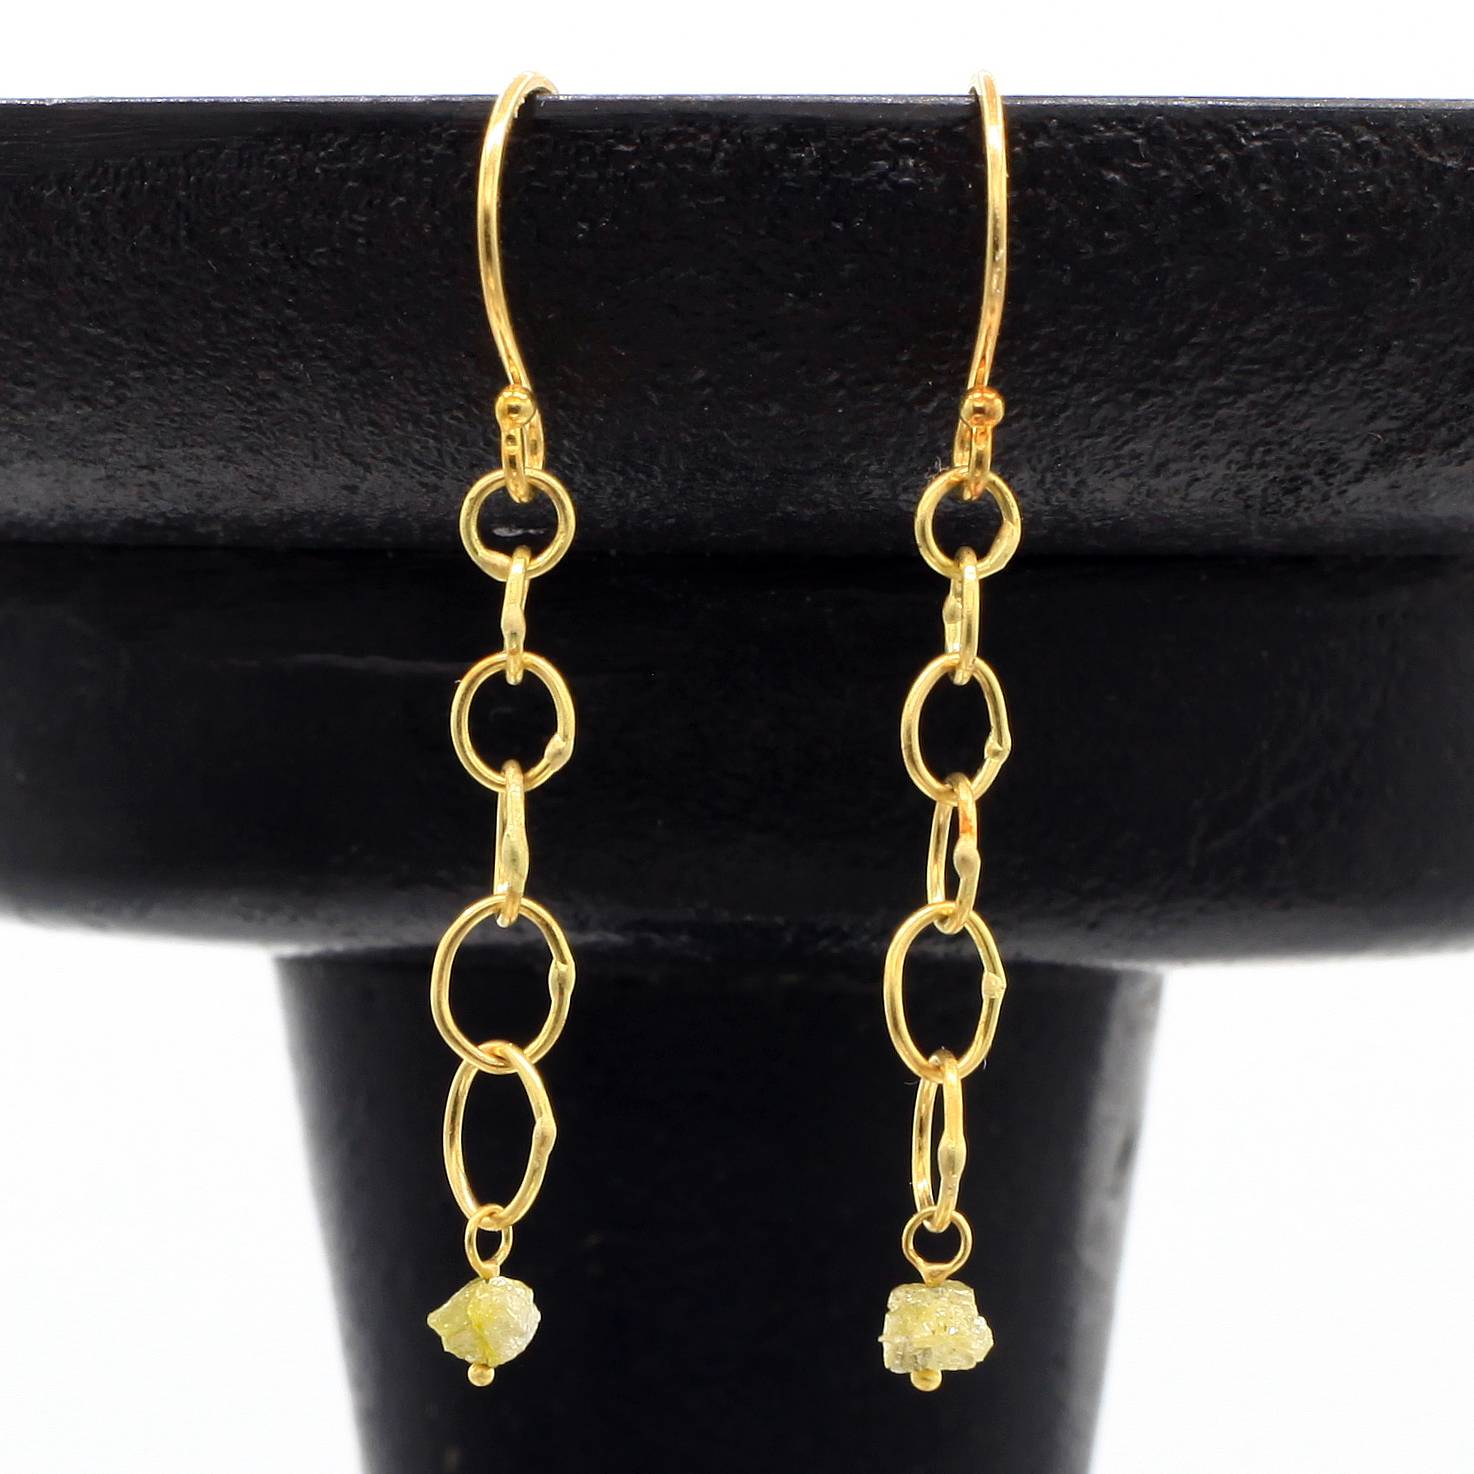 Sarah McGuire Studio | "Babble" 18k Gold + Rough Diamond Earrings | Firecracker